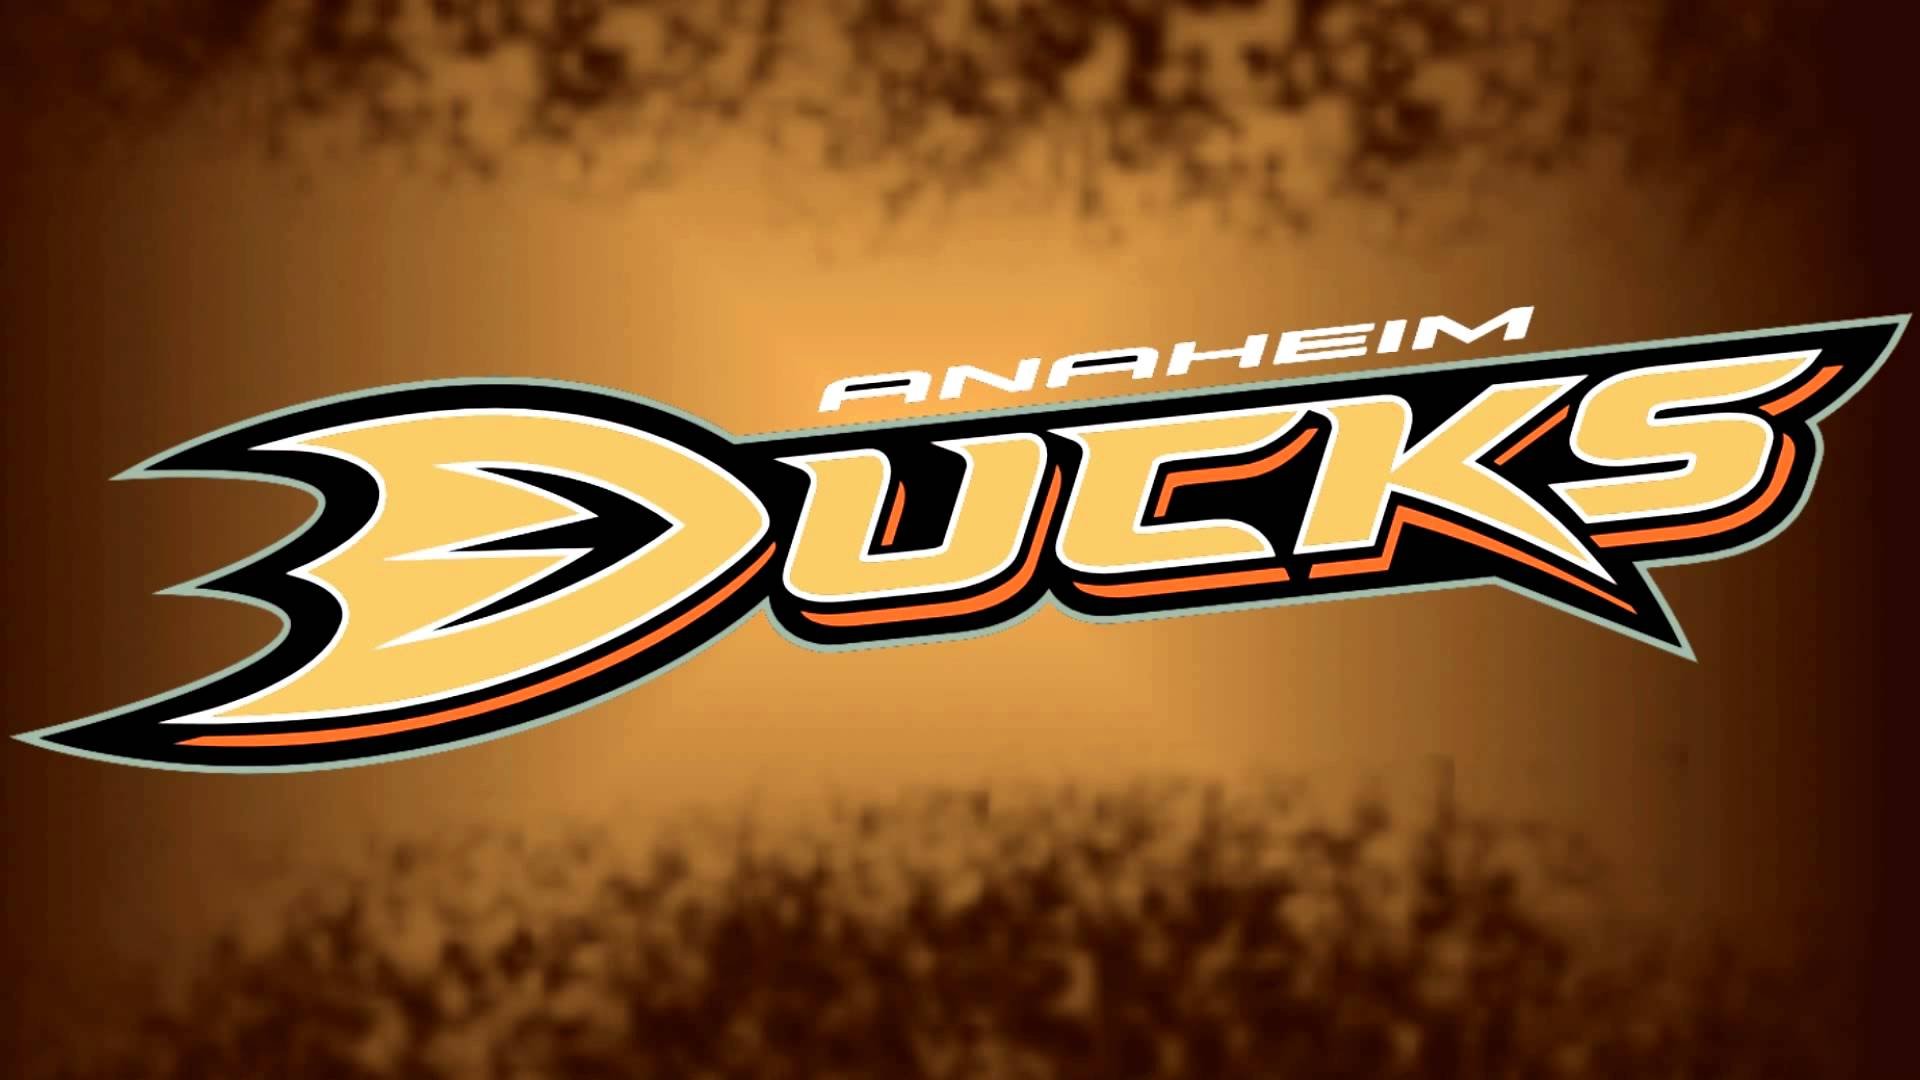 Anaheim Ducks Nhl Hockey Wallpaper